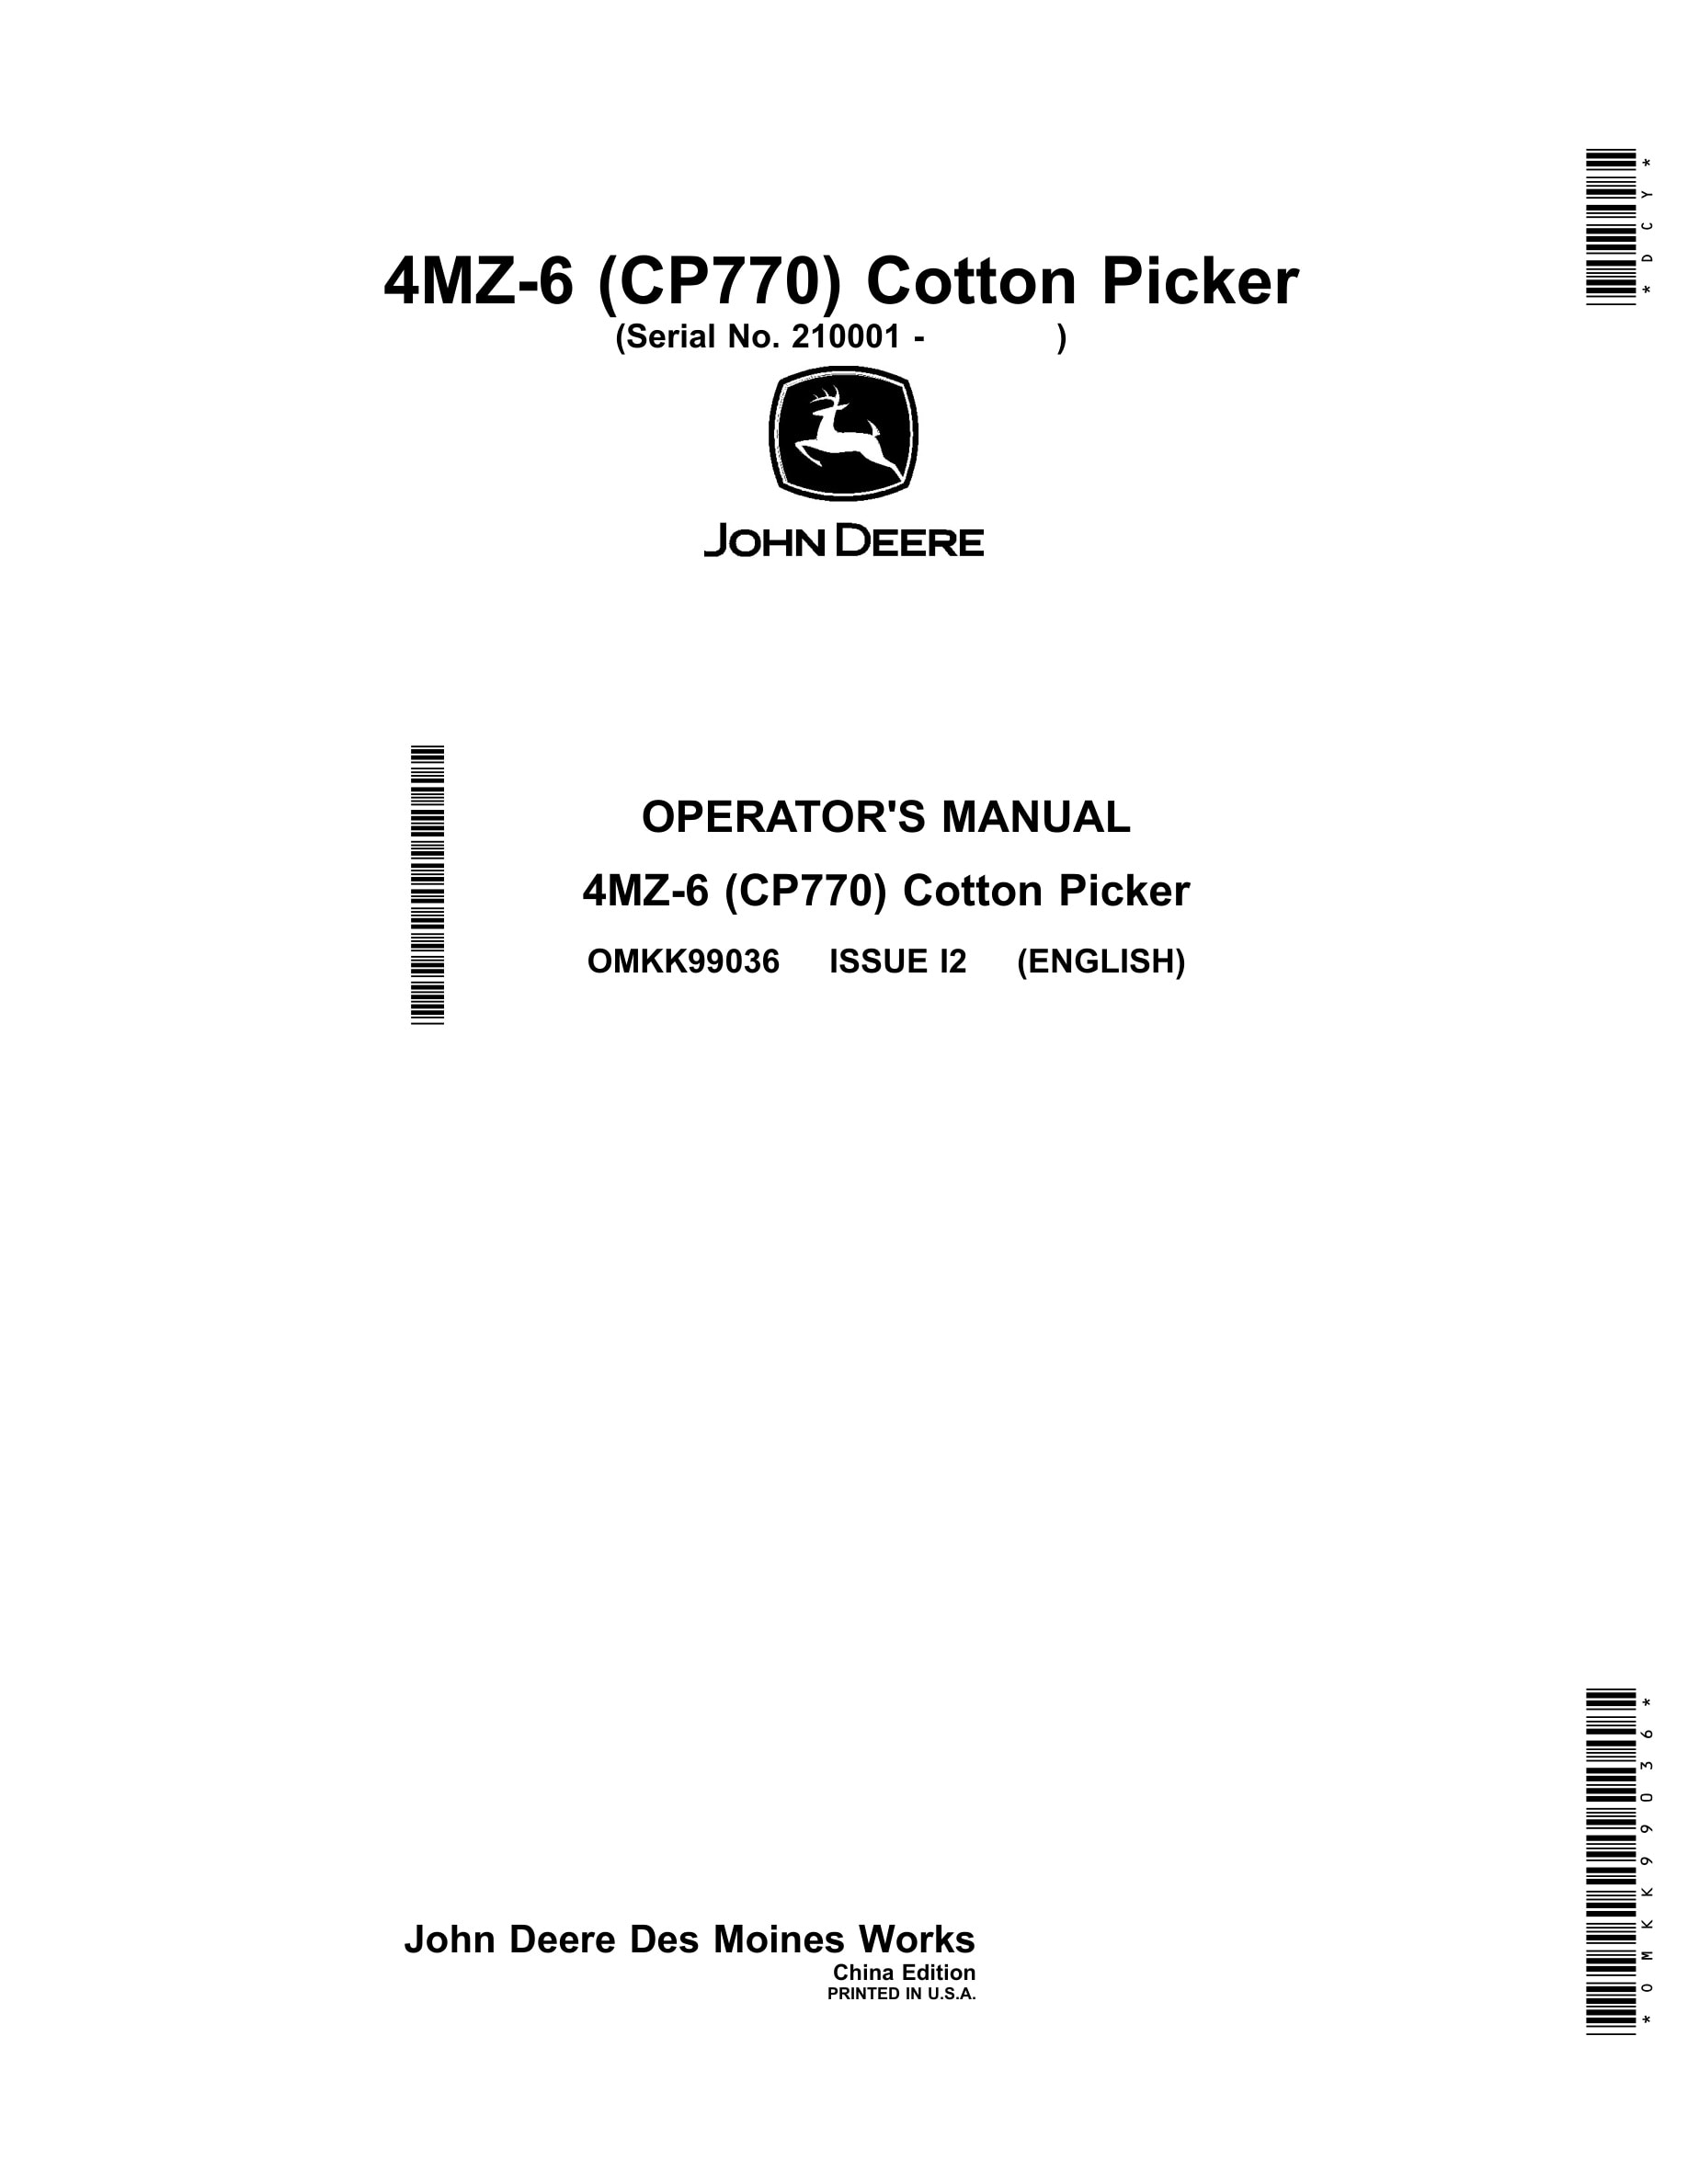 John Deere 4MZ-6 (CP770) Cotton Picker Operator Manual OMKK99036-1